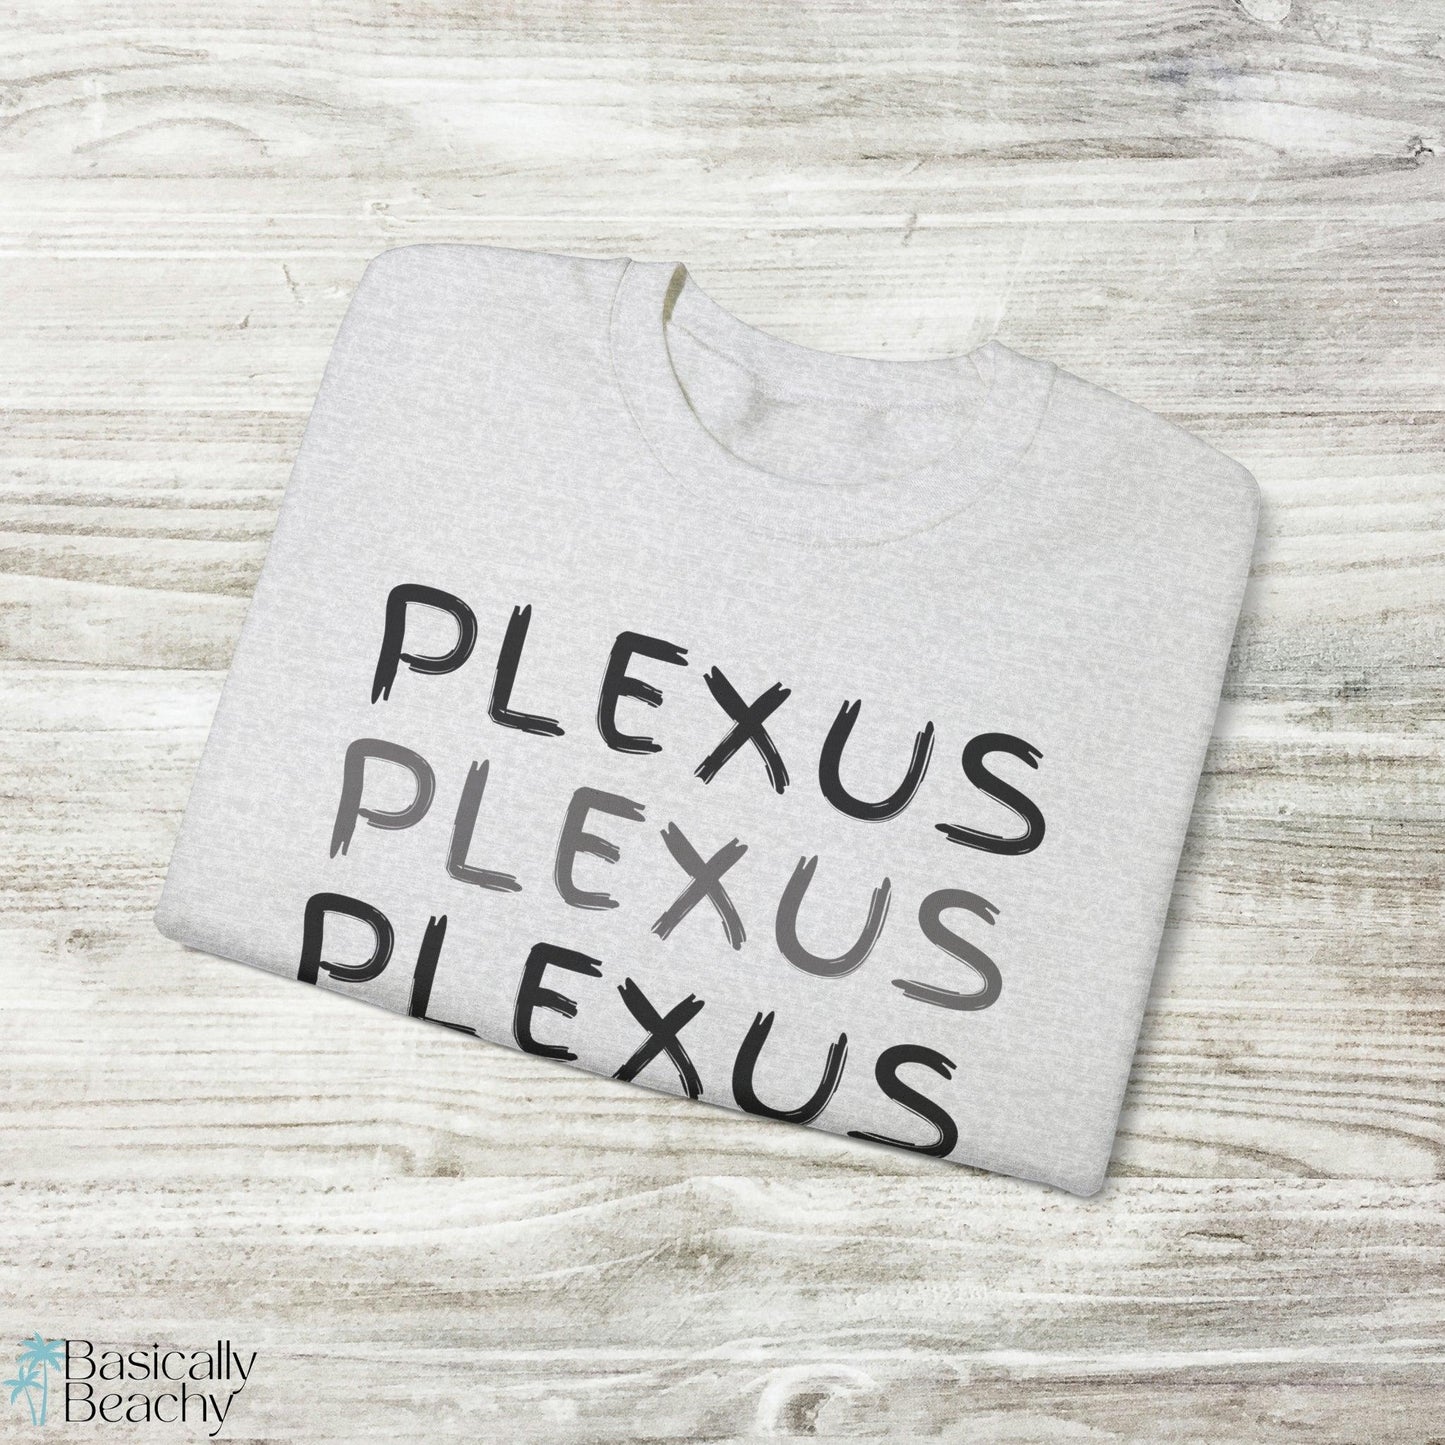 Plexus Sweatshirt, Hot Pink or Ash - Basically Beachy